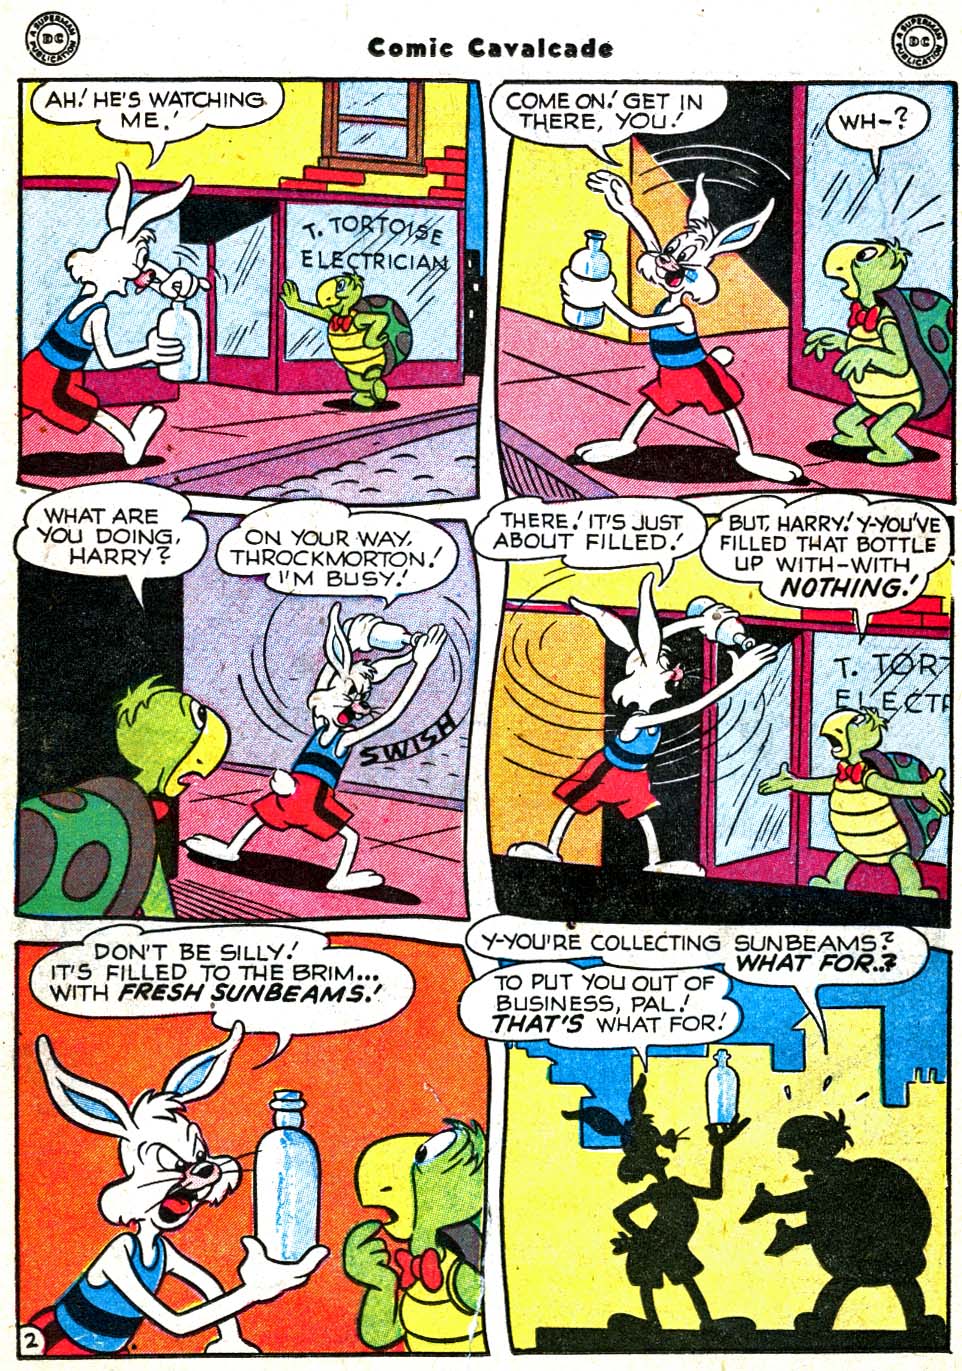 Comic Cavalcade issue 31 - Page 26